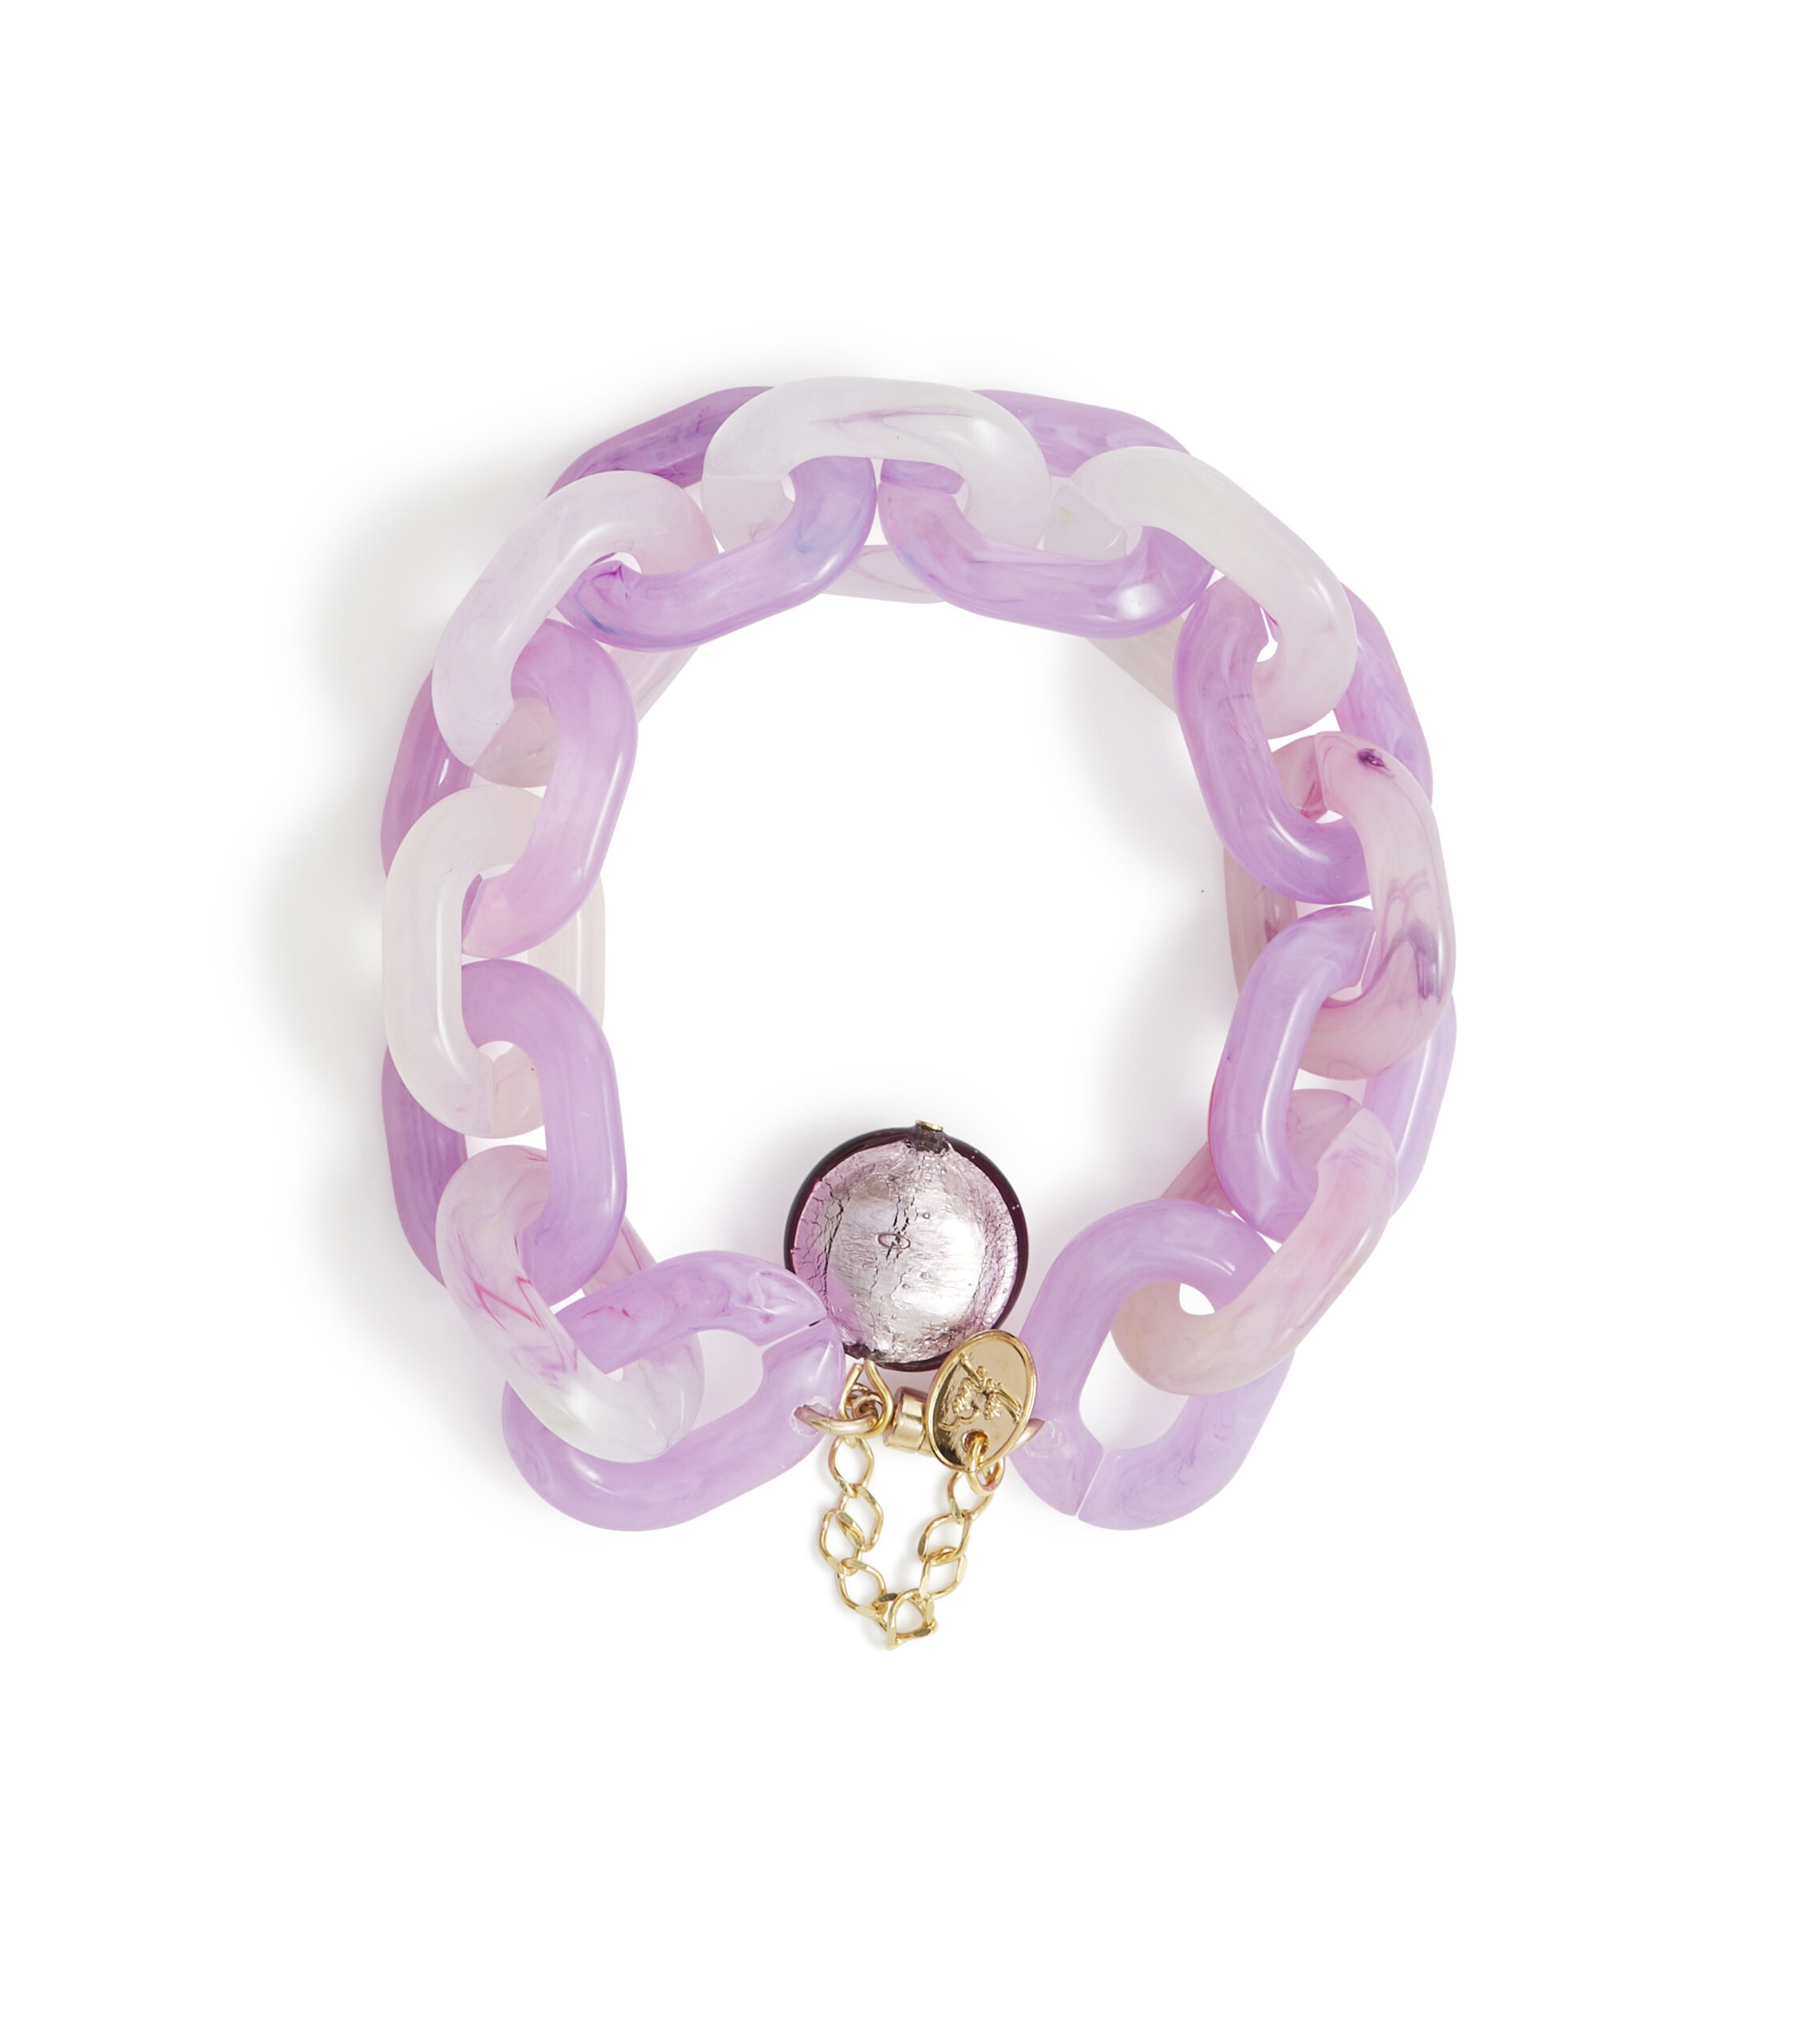 Yoko bracelet - Lilac and tie and dye mix